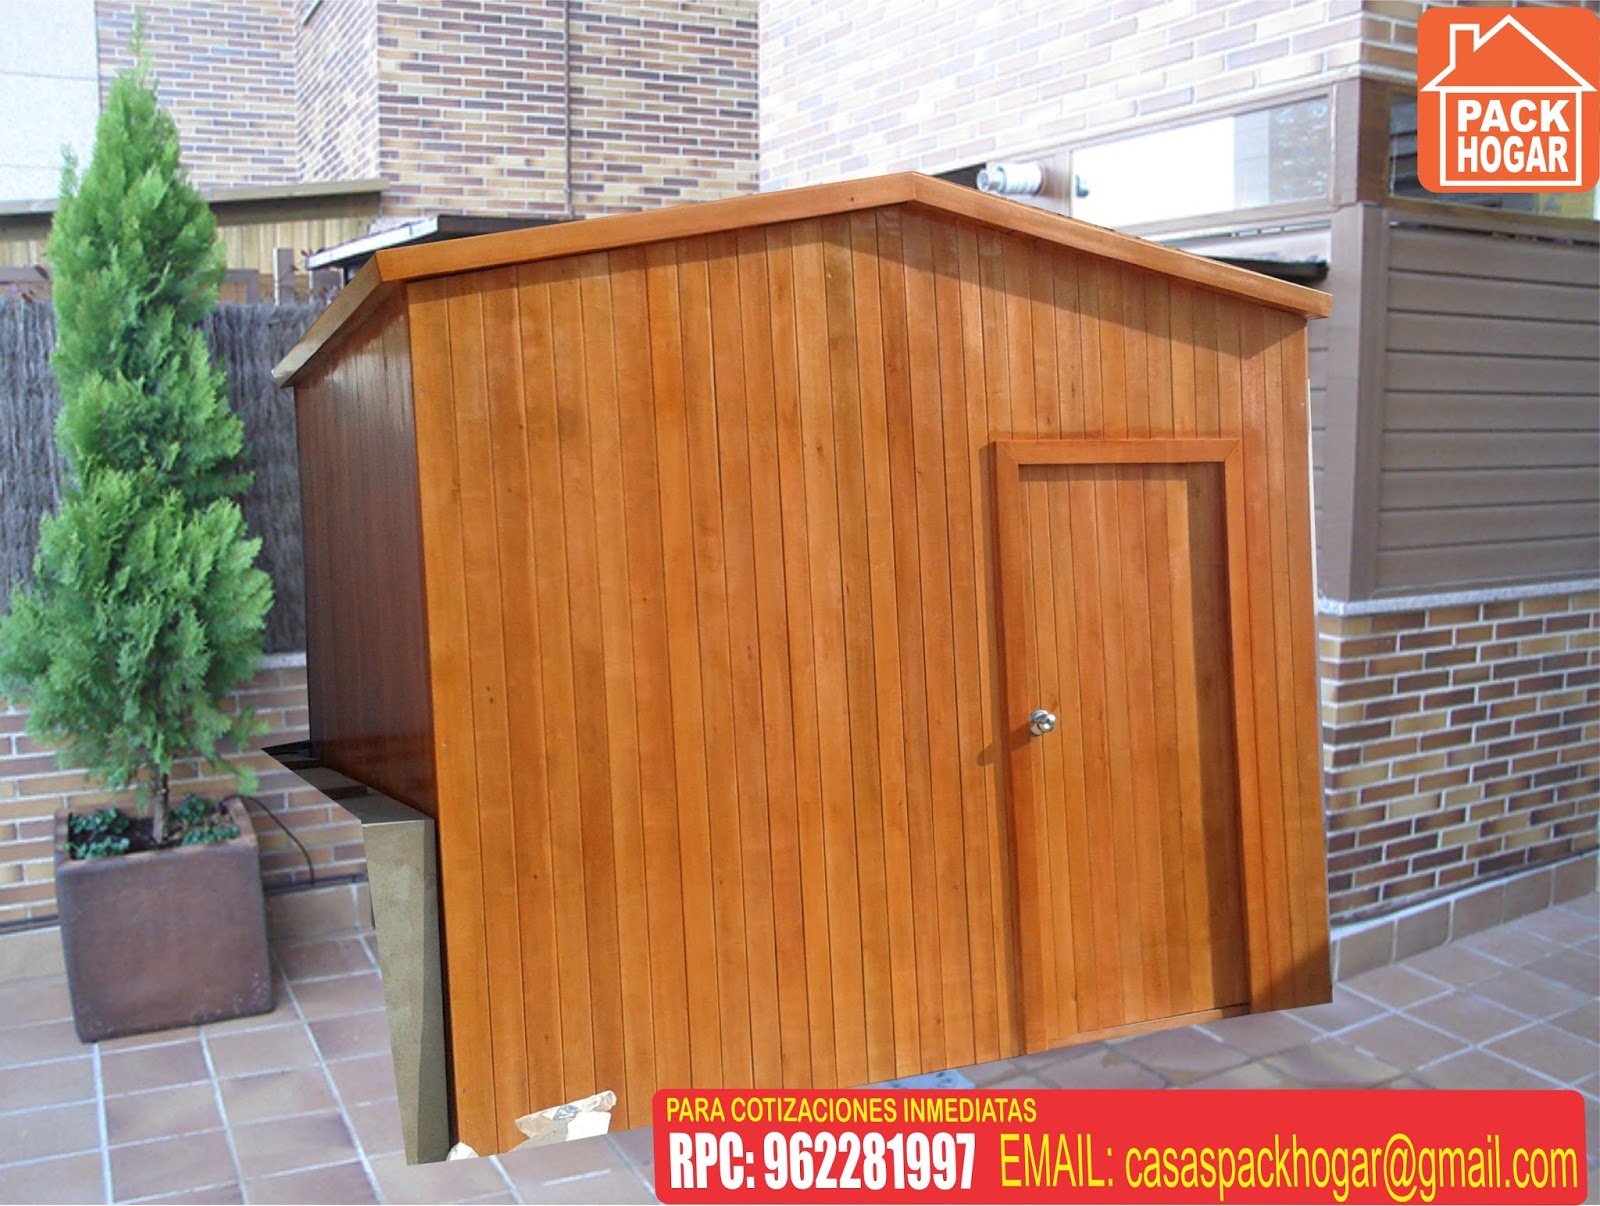 Caseta de madera prefabricada funcional